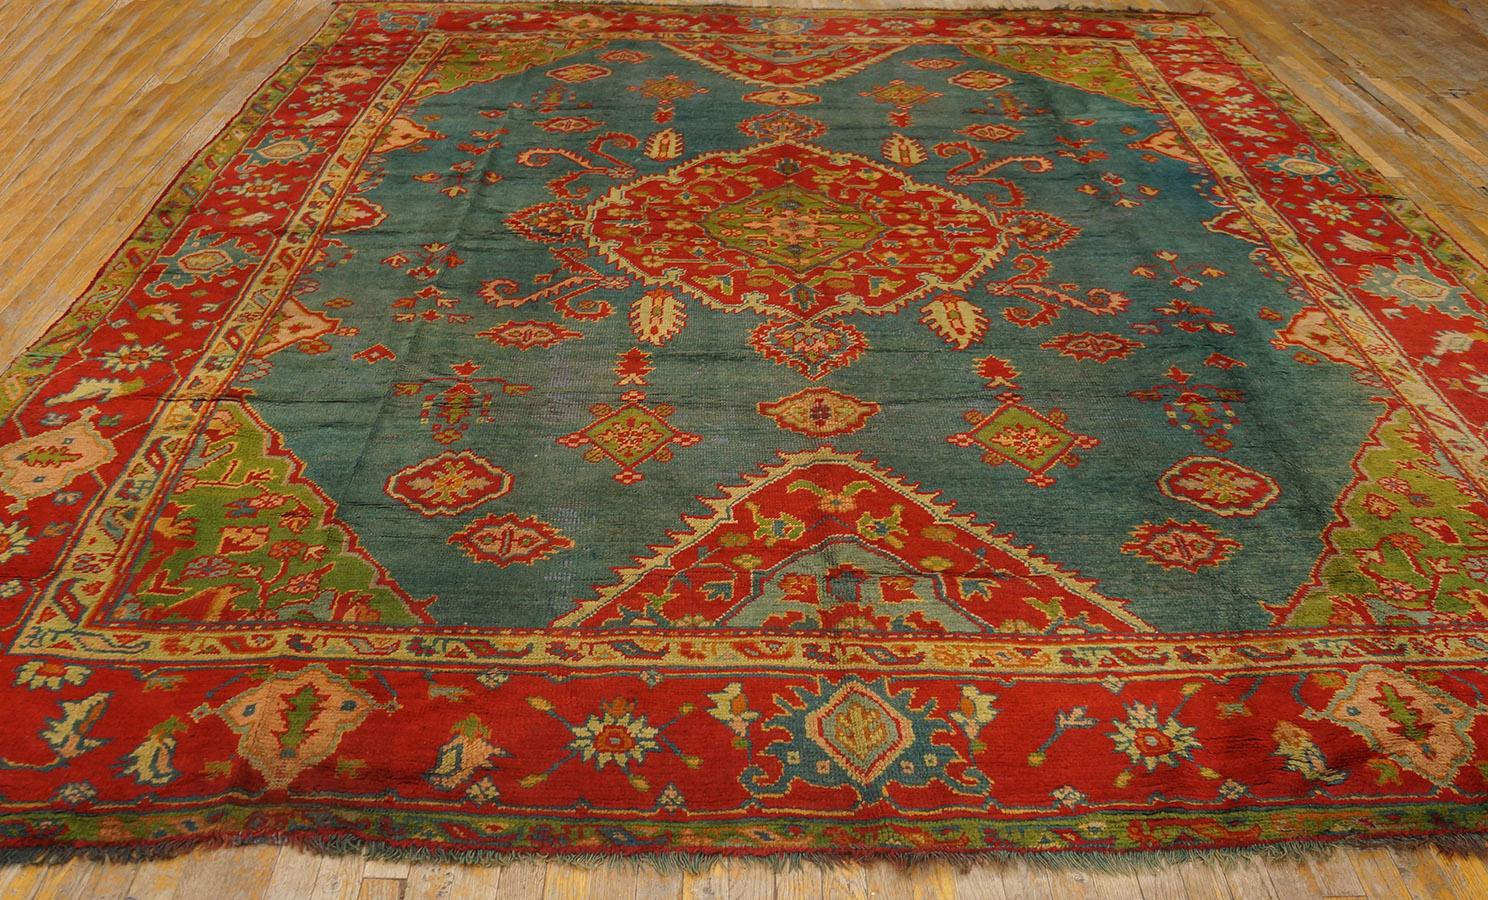 Late 19th Century Turkish Oushak Carpet ( 11' 2'' x 13' 1'' - 340 x 398 cm ) For Sale 4